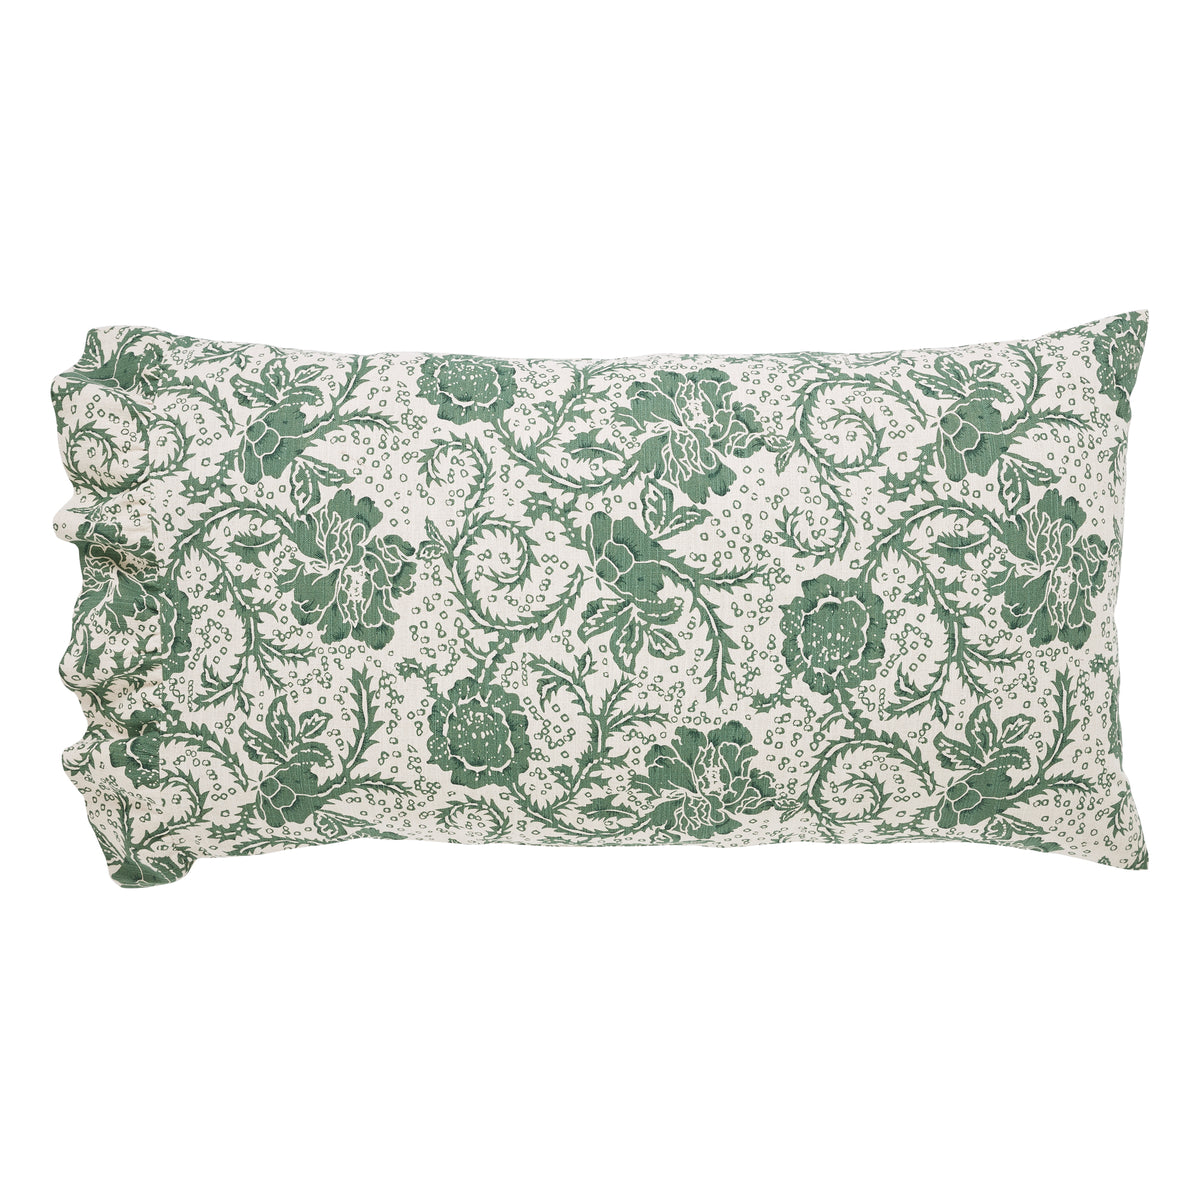 Dorset Green Floral Ruffled King Pillow Case Set of 2 21x36+4